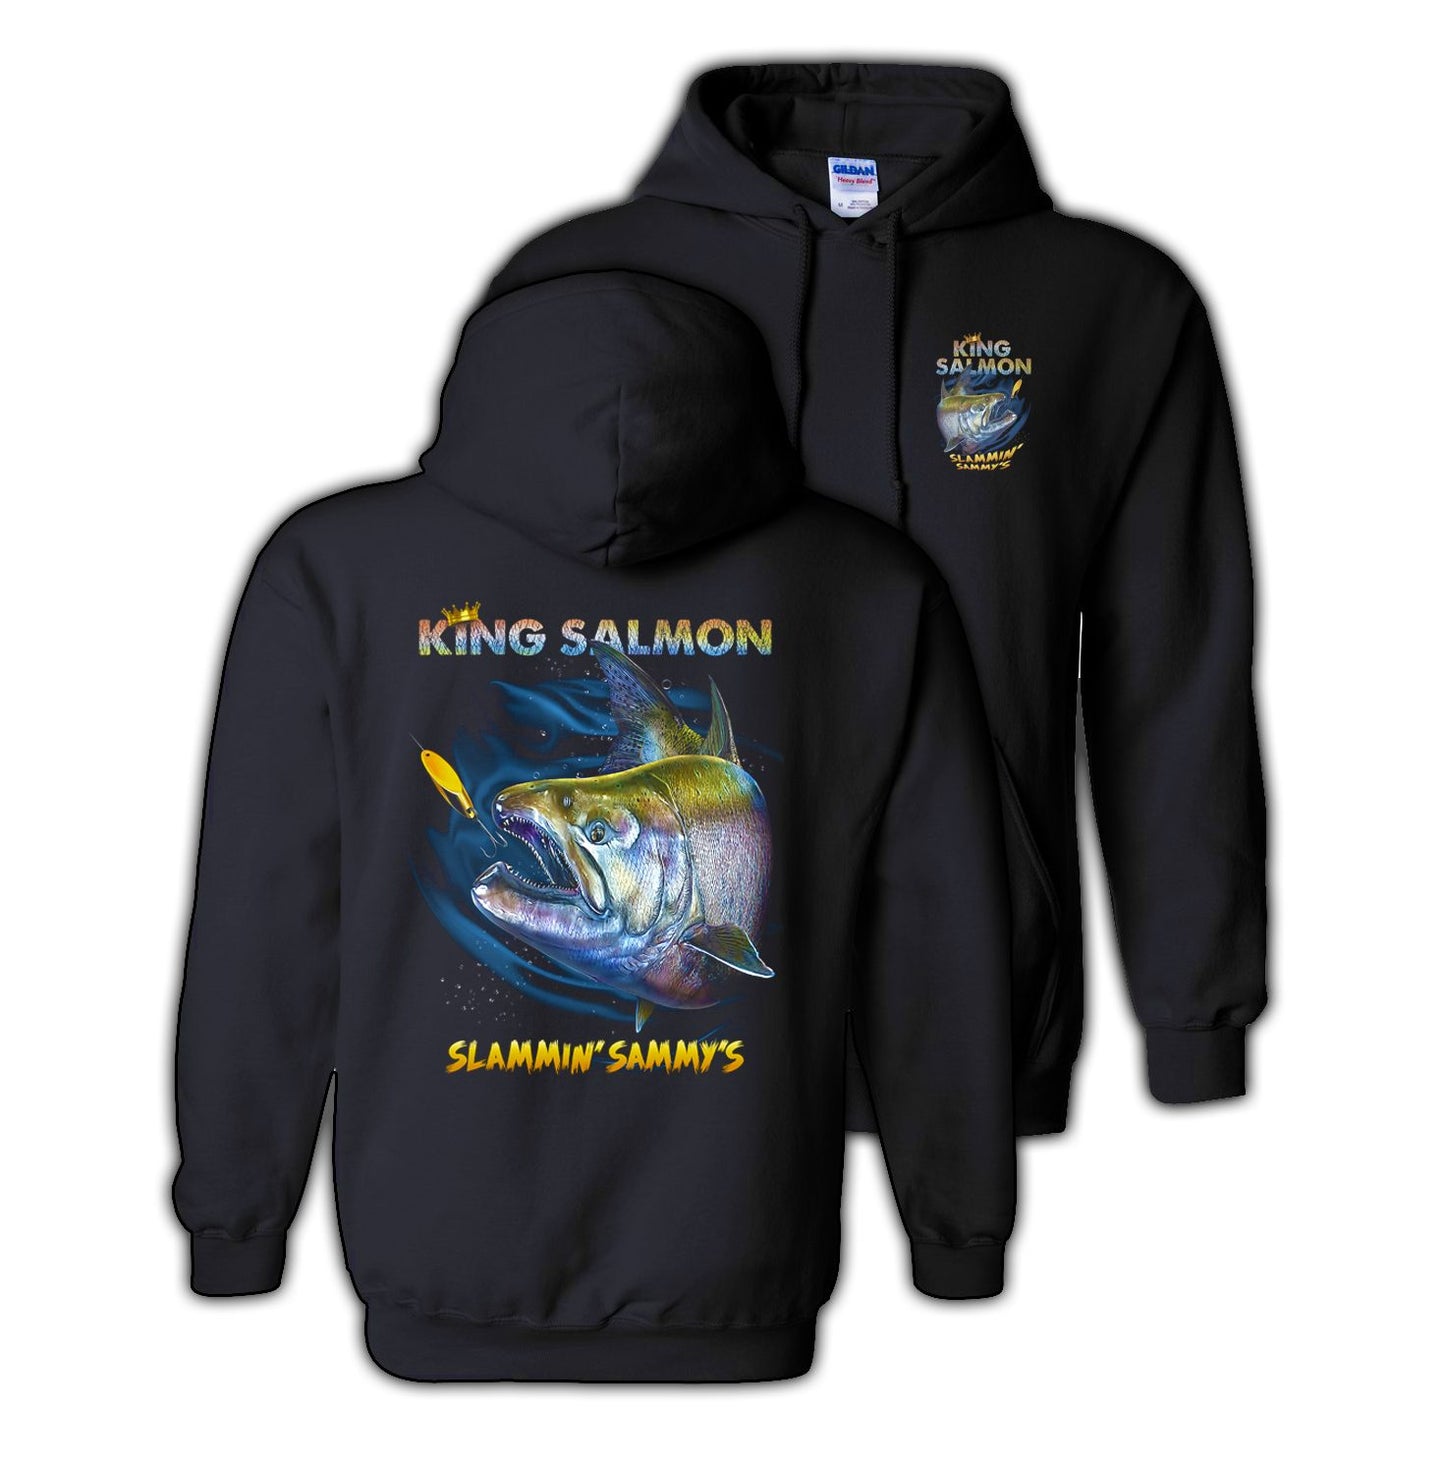 King Salmon “Slammin’ Sammy’s” Hooded Sweatshirt